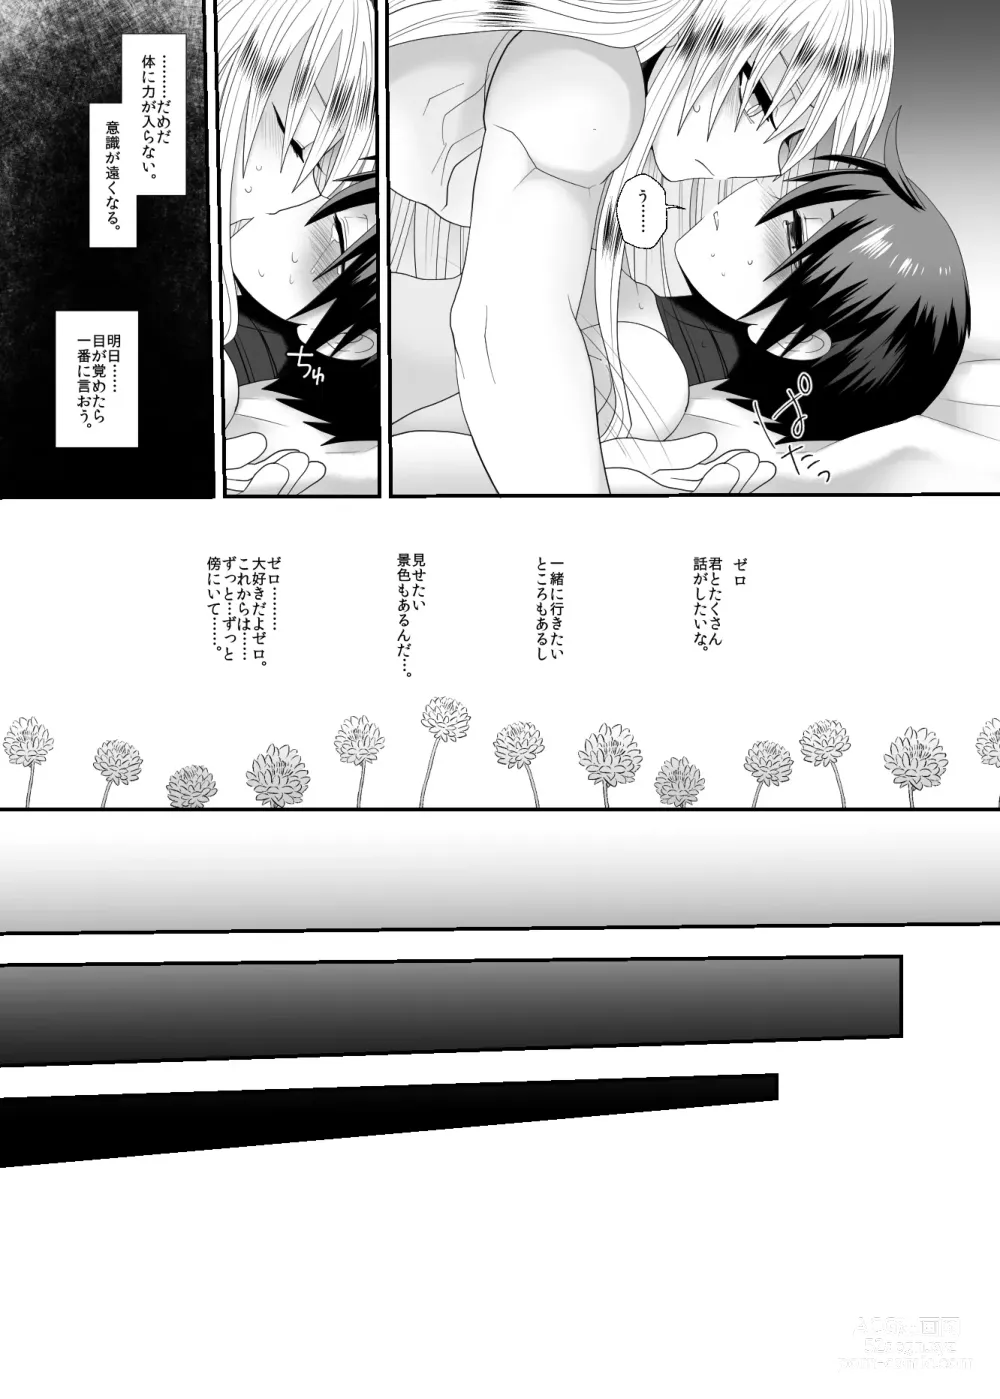 Page 26 of doujinshi Lost Arcadia